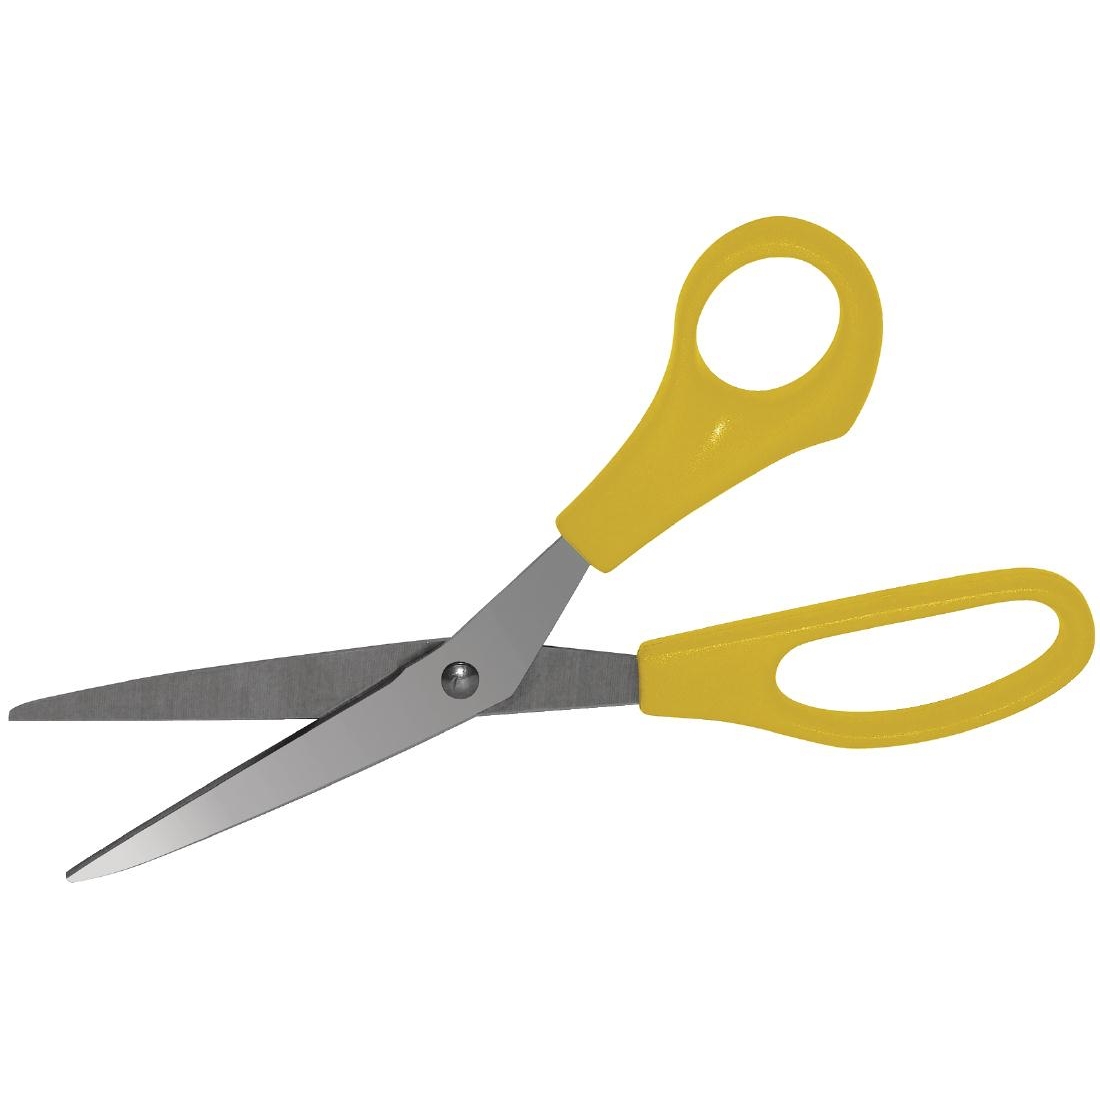 dm038_y_vogue-yellow-scissors